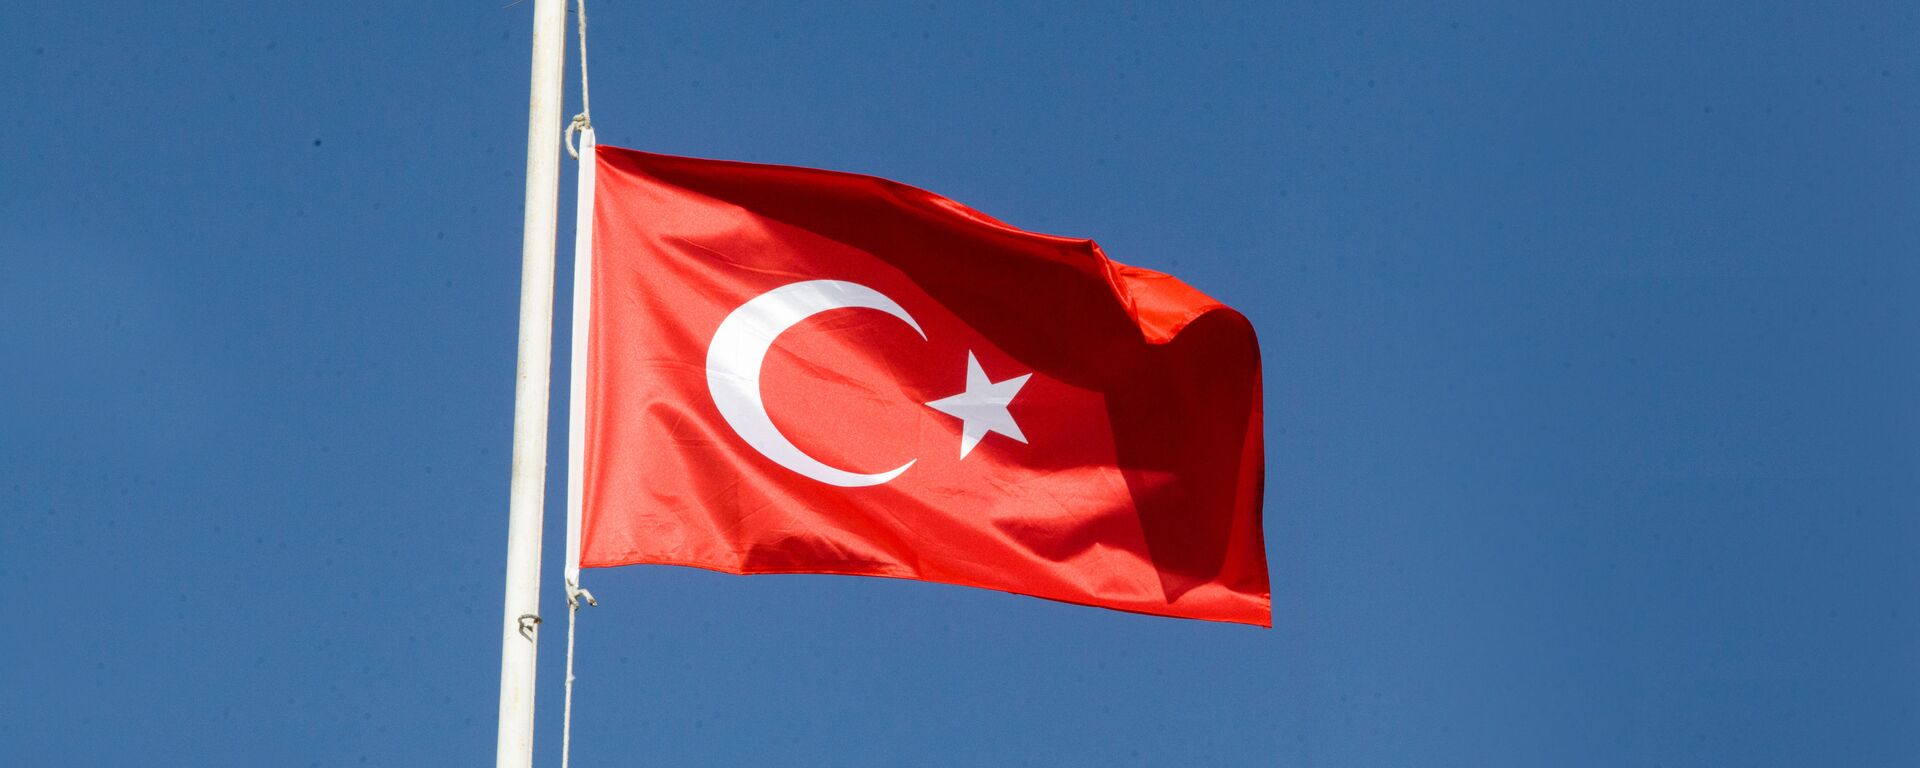 Флаг Турции, фото из архива - Sputnik Azərbaycan, 1920, 27.11.2021